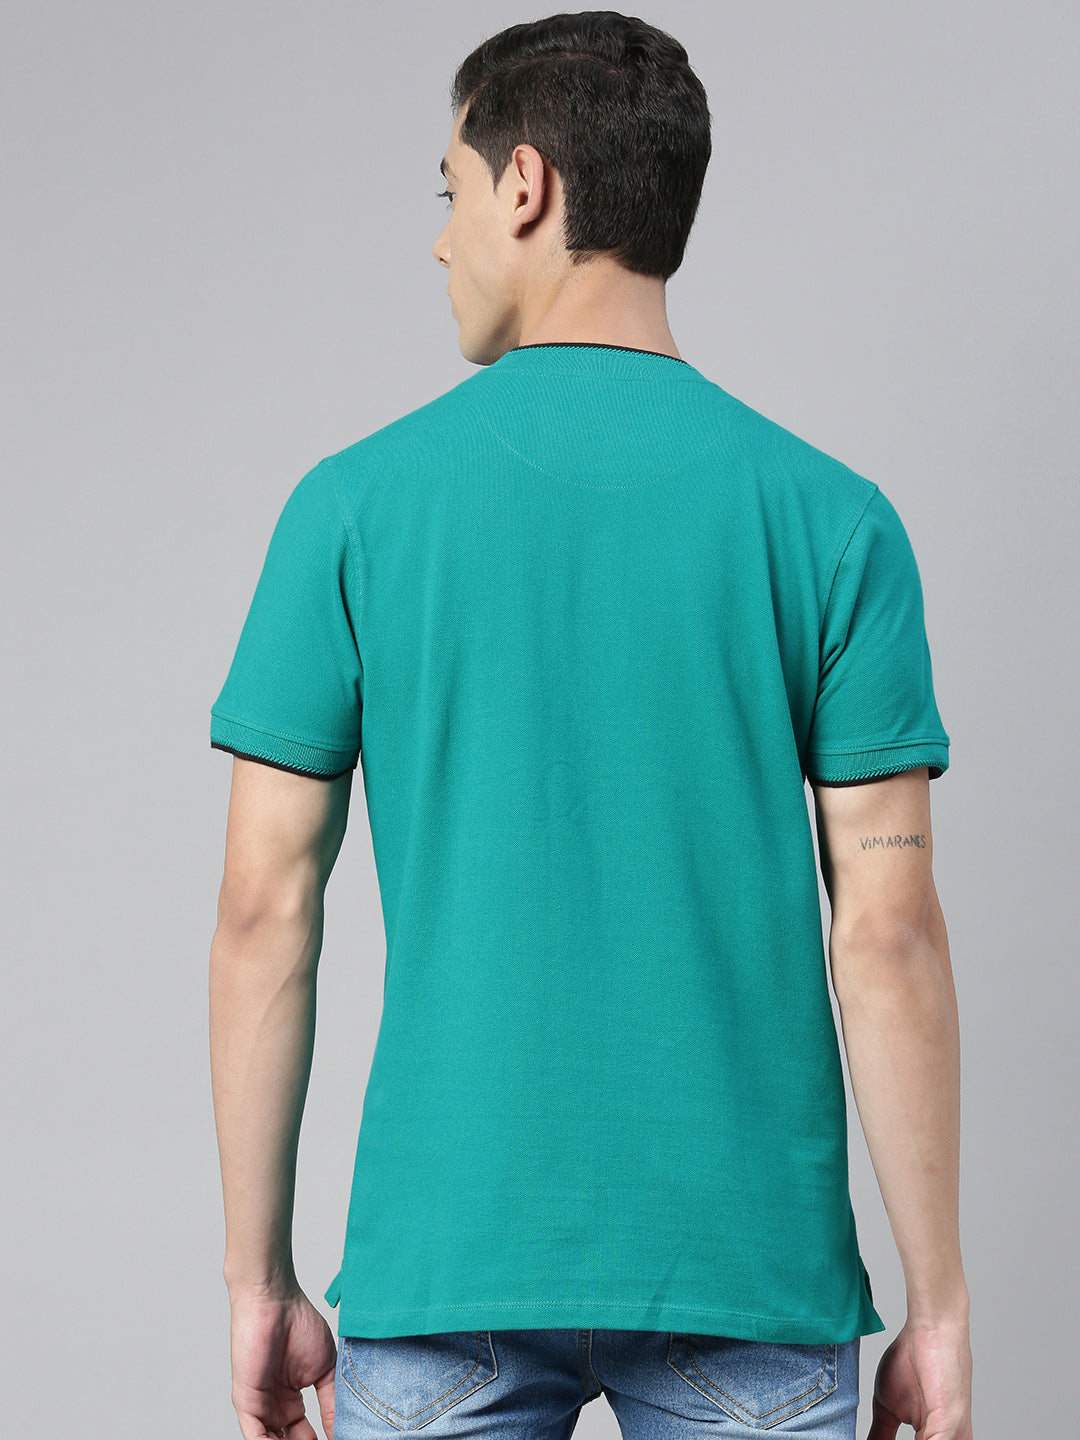 Men's Teal Green Solid Mandarin Collar Slim Fit Cotton Polo T-Shirt